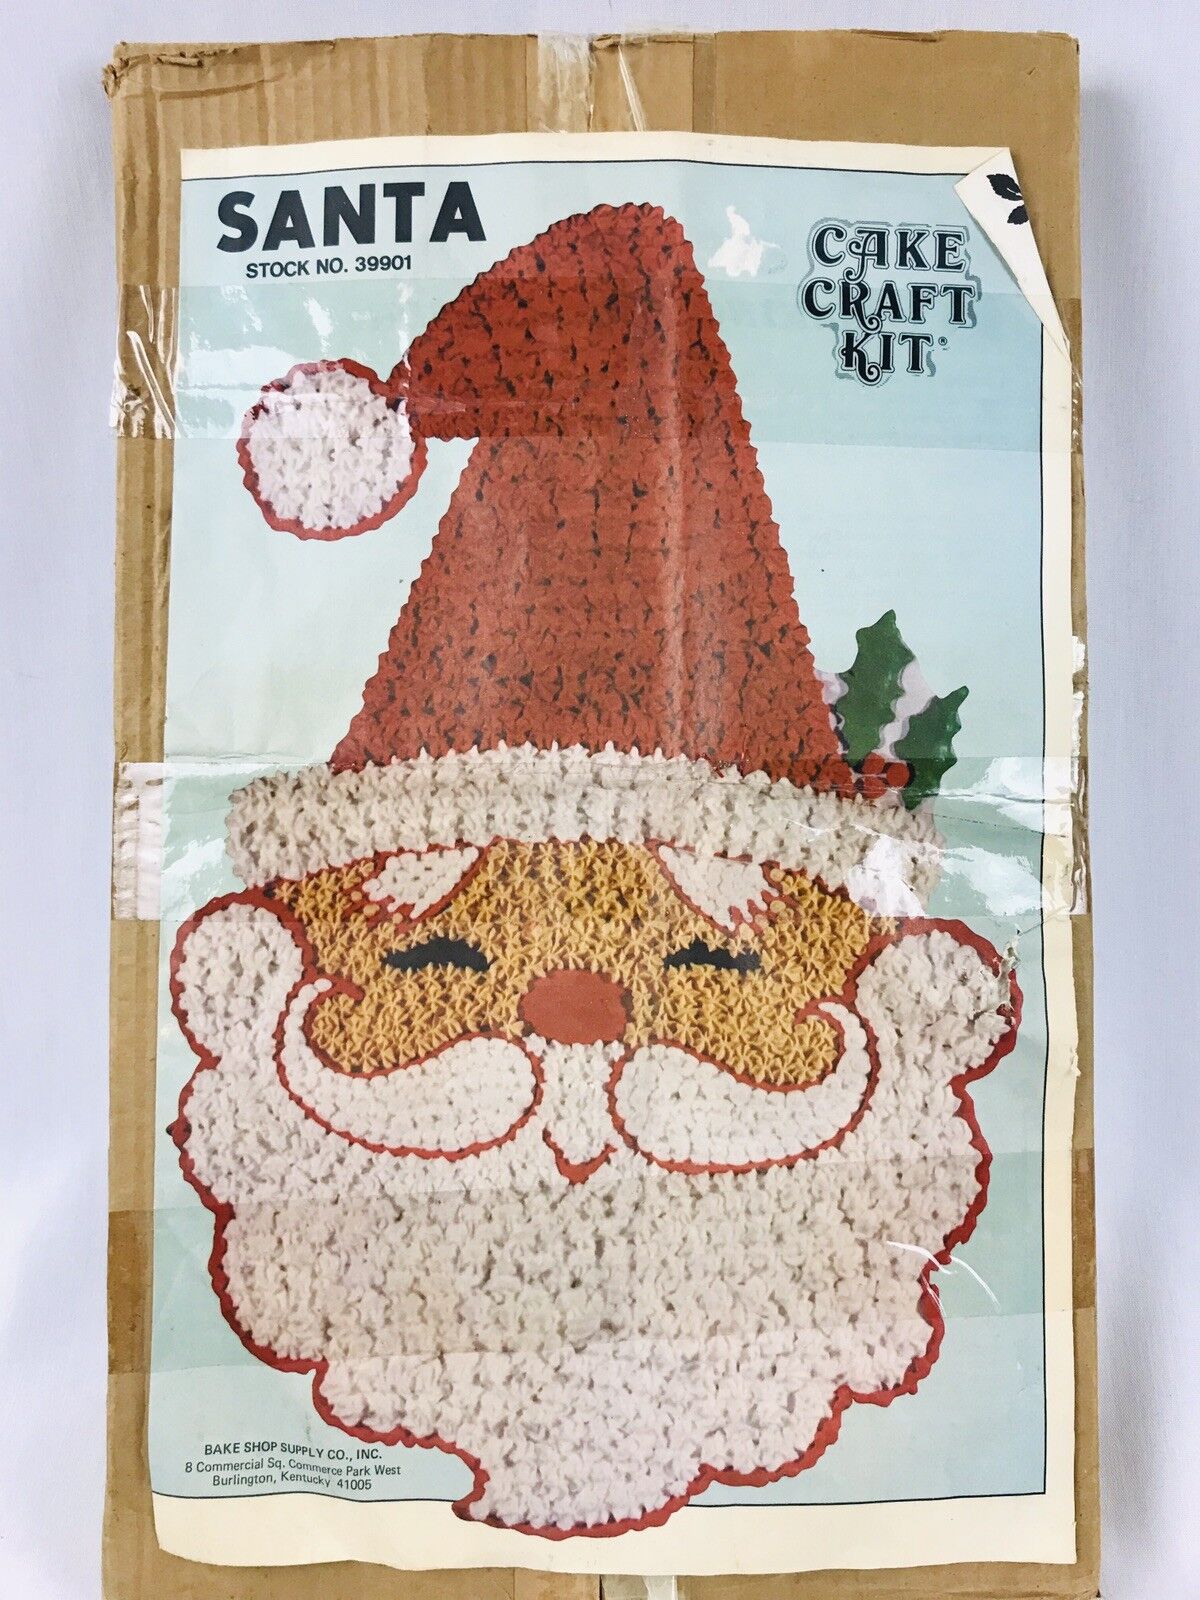 Vintage Santa Christmas Cake Decorating Kit in Box Bake Shop Supply Co MCM